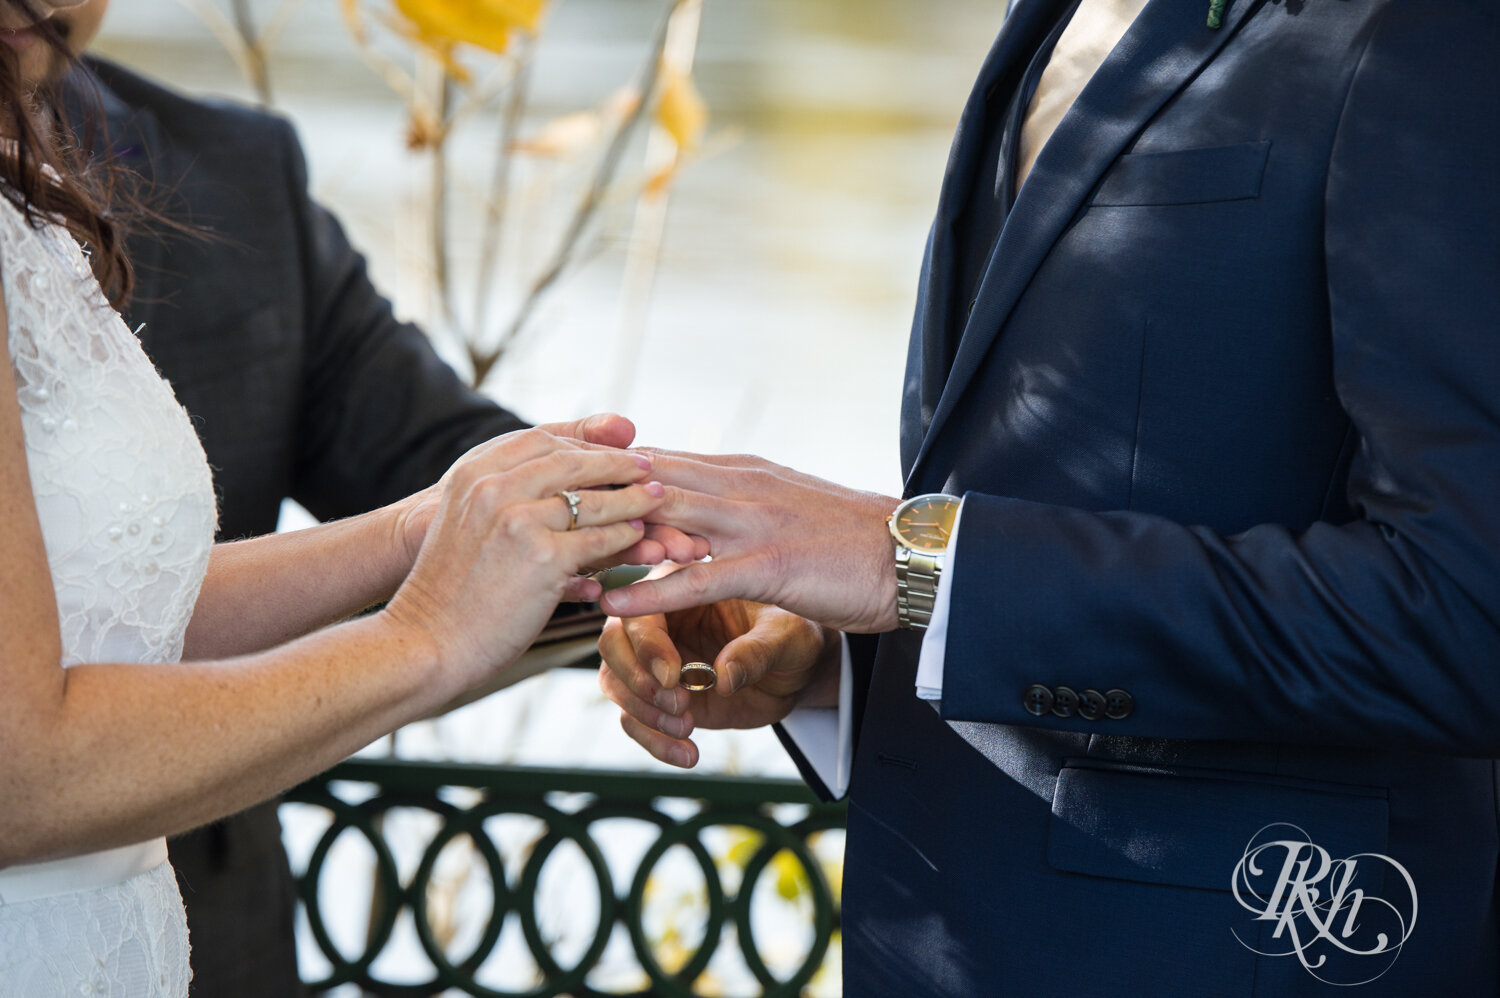 Bride and groom exchange rings at wedding ceremony on Boom Island in Minneapolis, Minnesota.